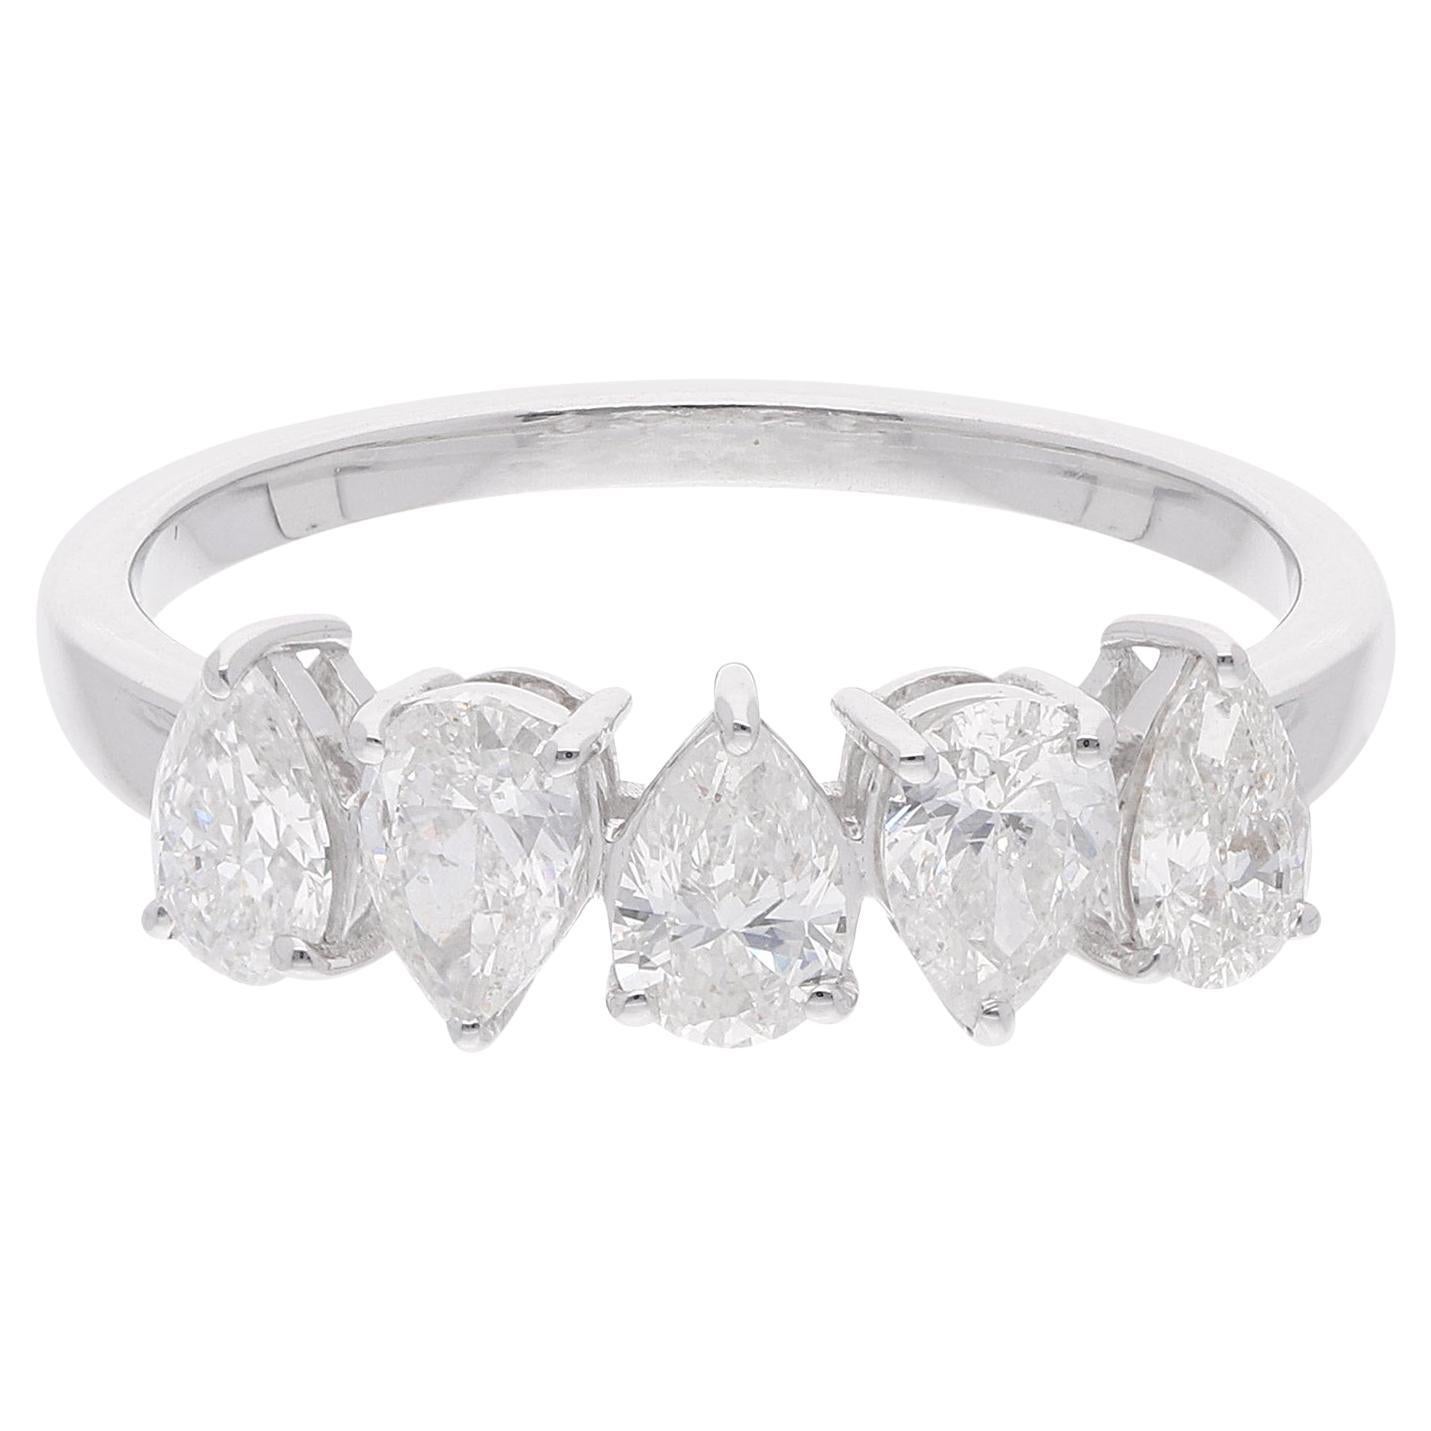 1.20 Carat SI Clarity HI Color Pear Shape Diamond Band Ring 18 Karat White Gold For Sale